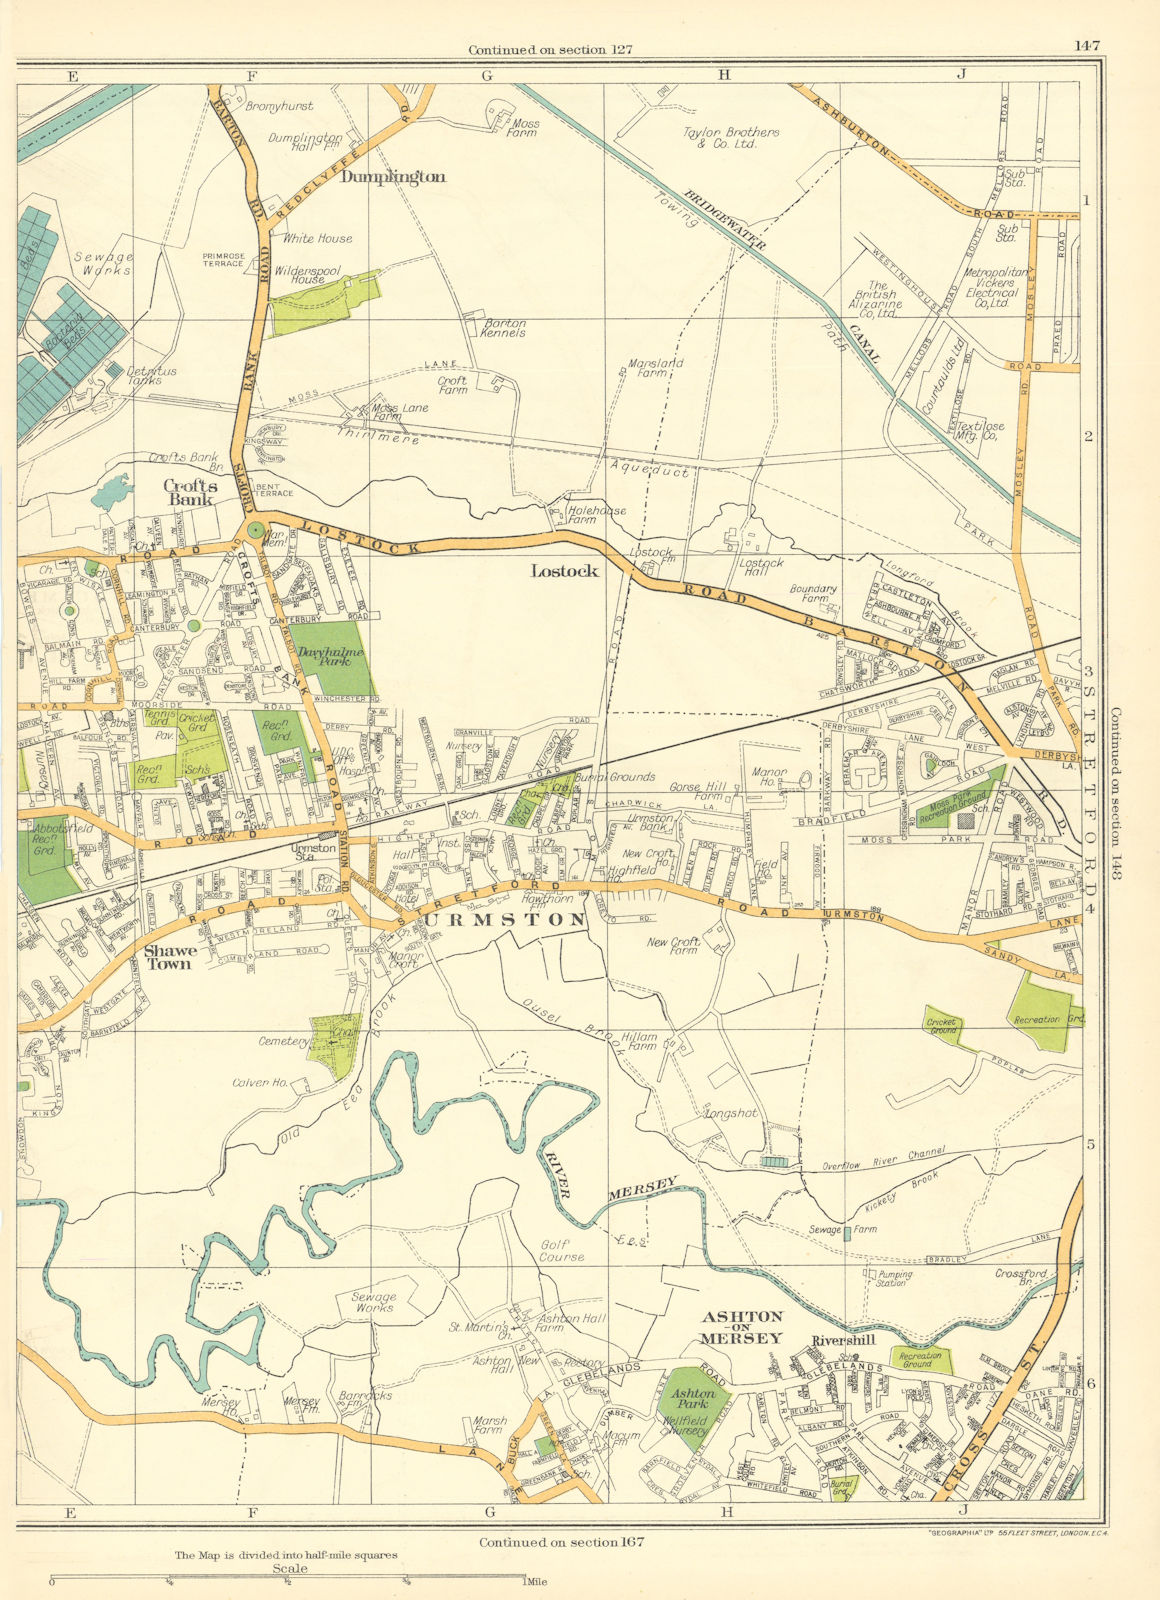 LANCASHIRE Urmston Ashton-on-Mersey Shawe town Crofts Bank Dumplington 1935 map